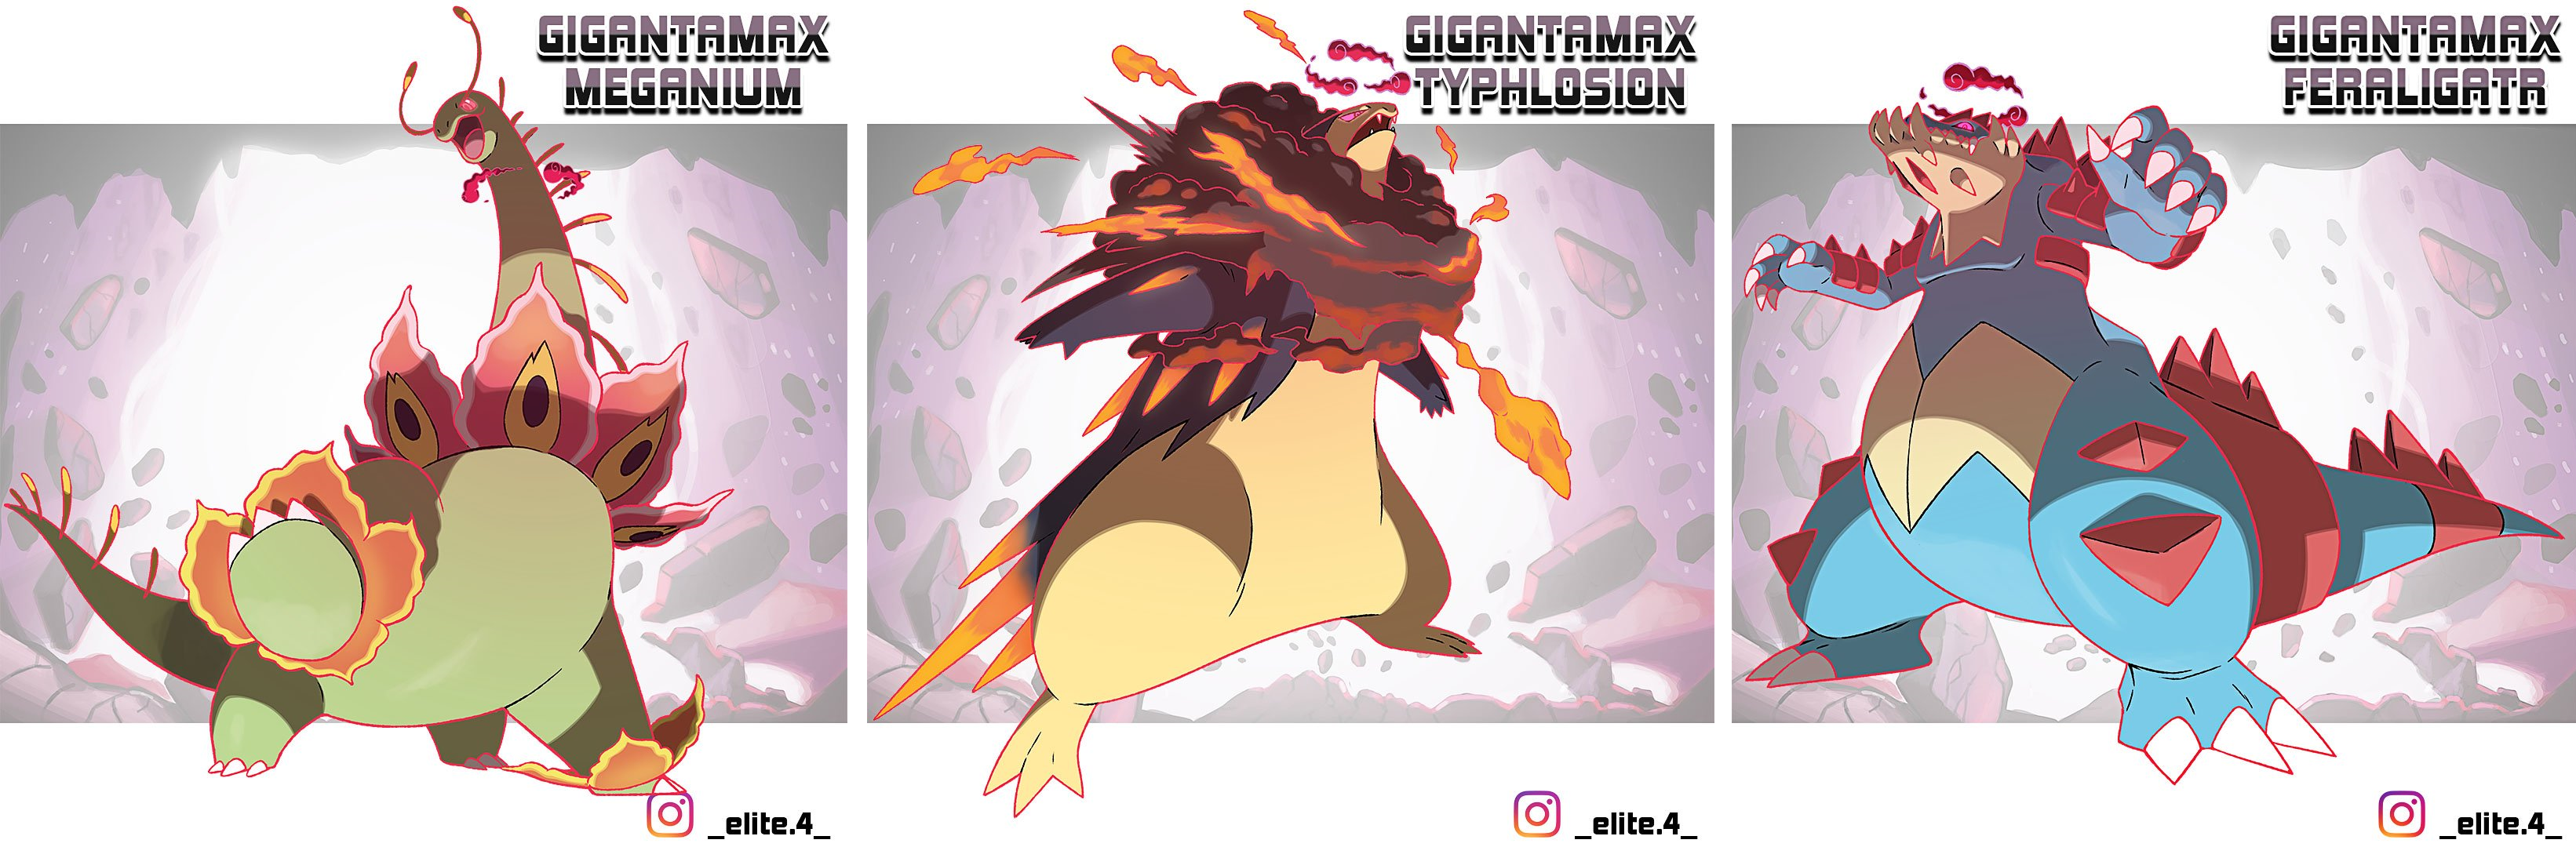 Fan Made Gigantamax Pokemon - HD Wallpaper 